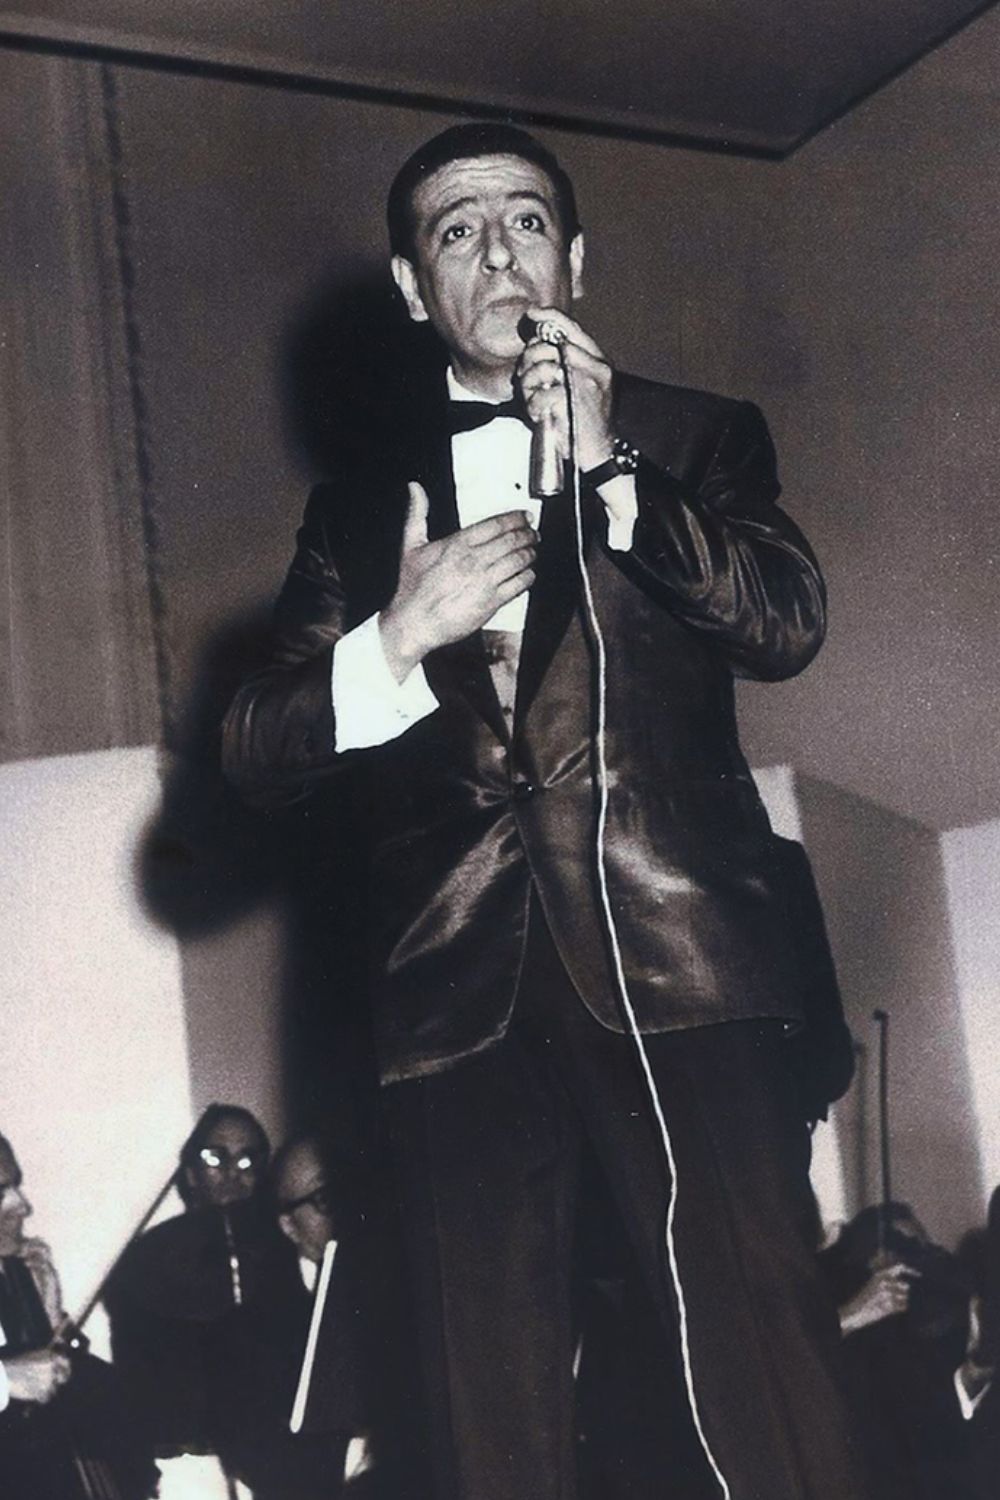 Jorge Vidal, Argentine Tango singer.